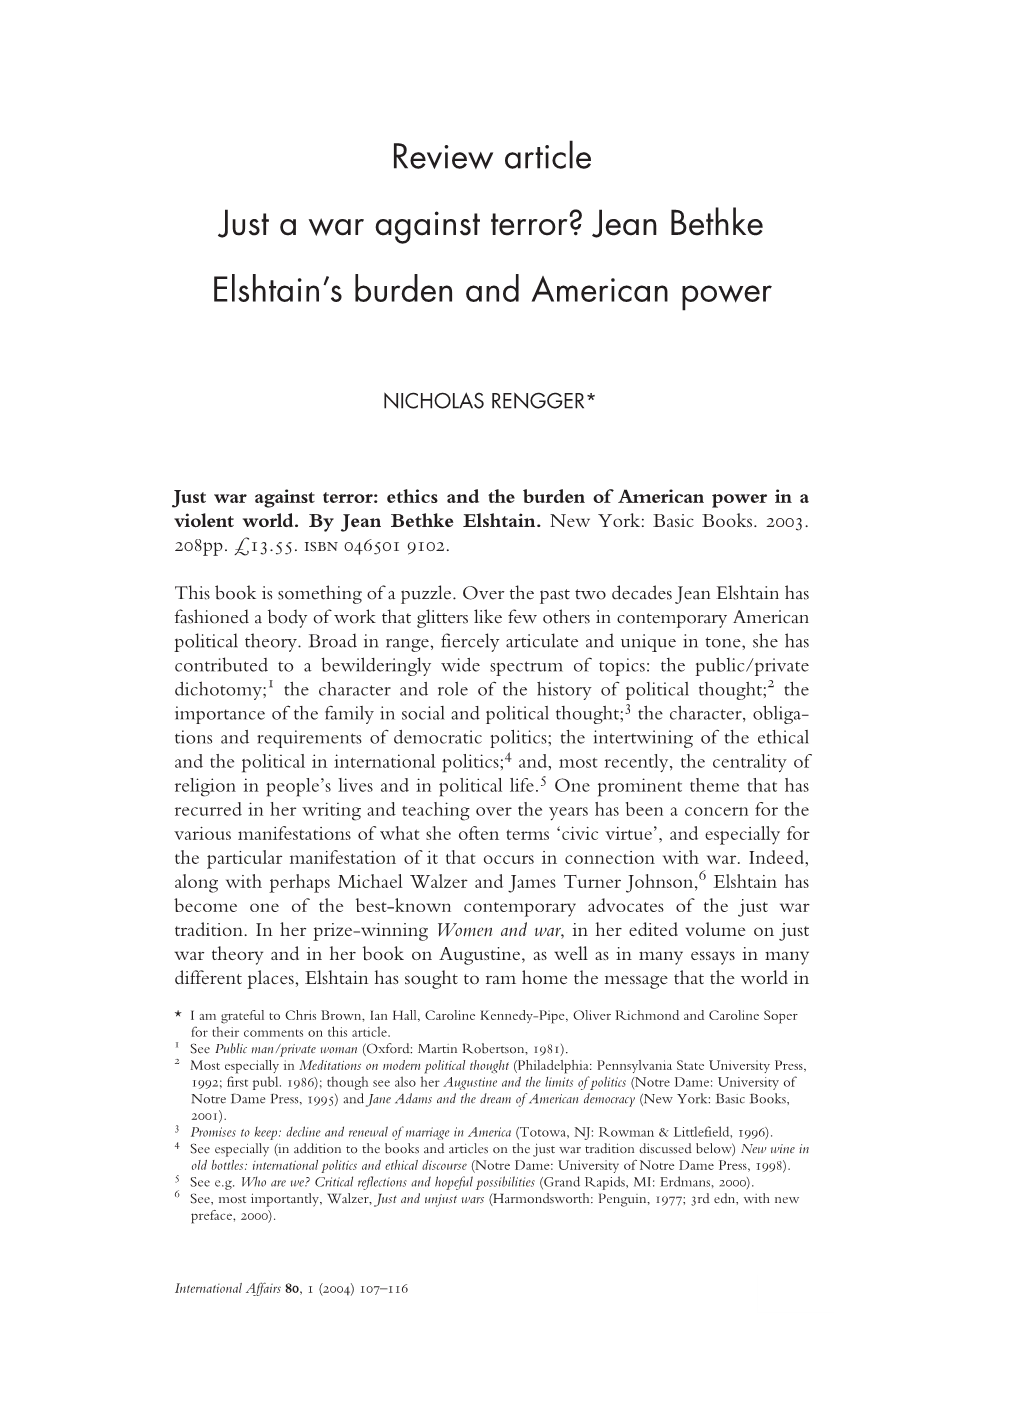 Review Article Just a War Against Terror? Jean Bethke Elshtain's